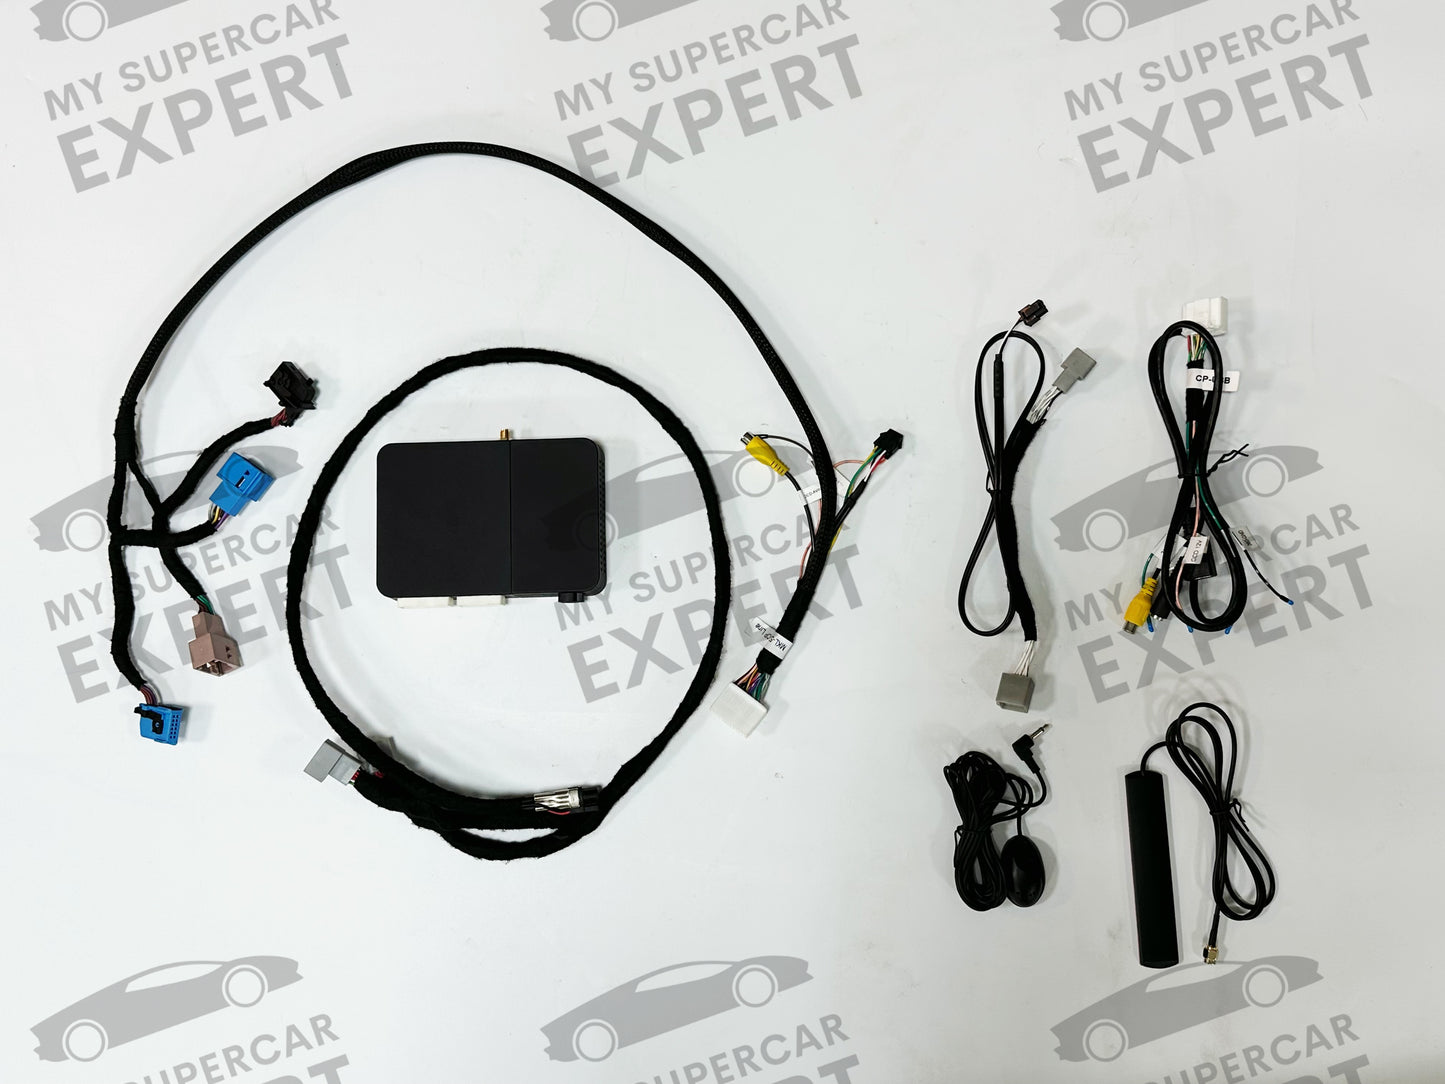 McLaren MP4-12C 650S 570S 540C P1 MSE Carplay Add Carplay/HiCar Kit